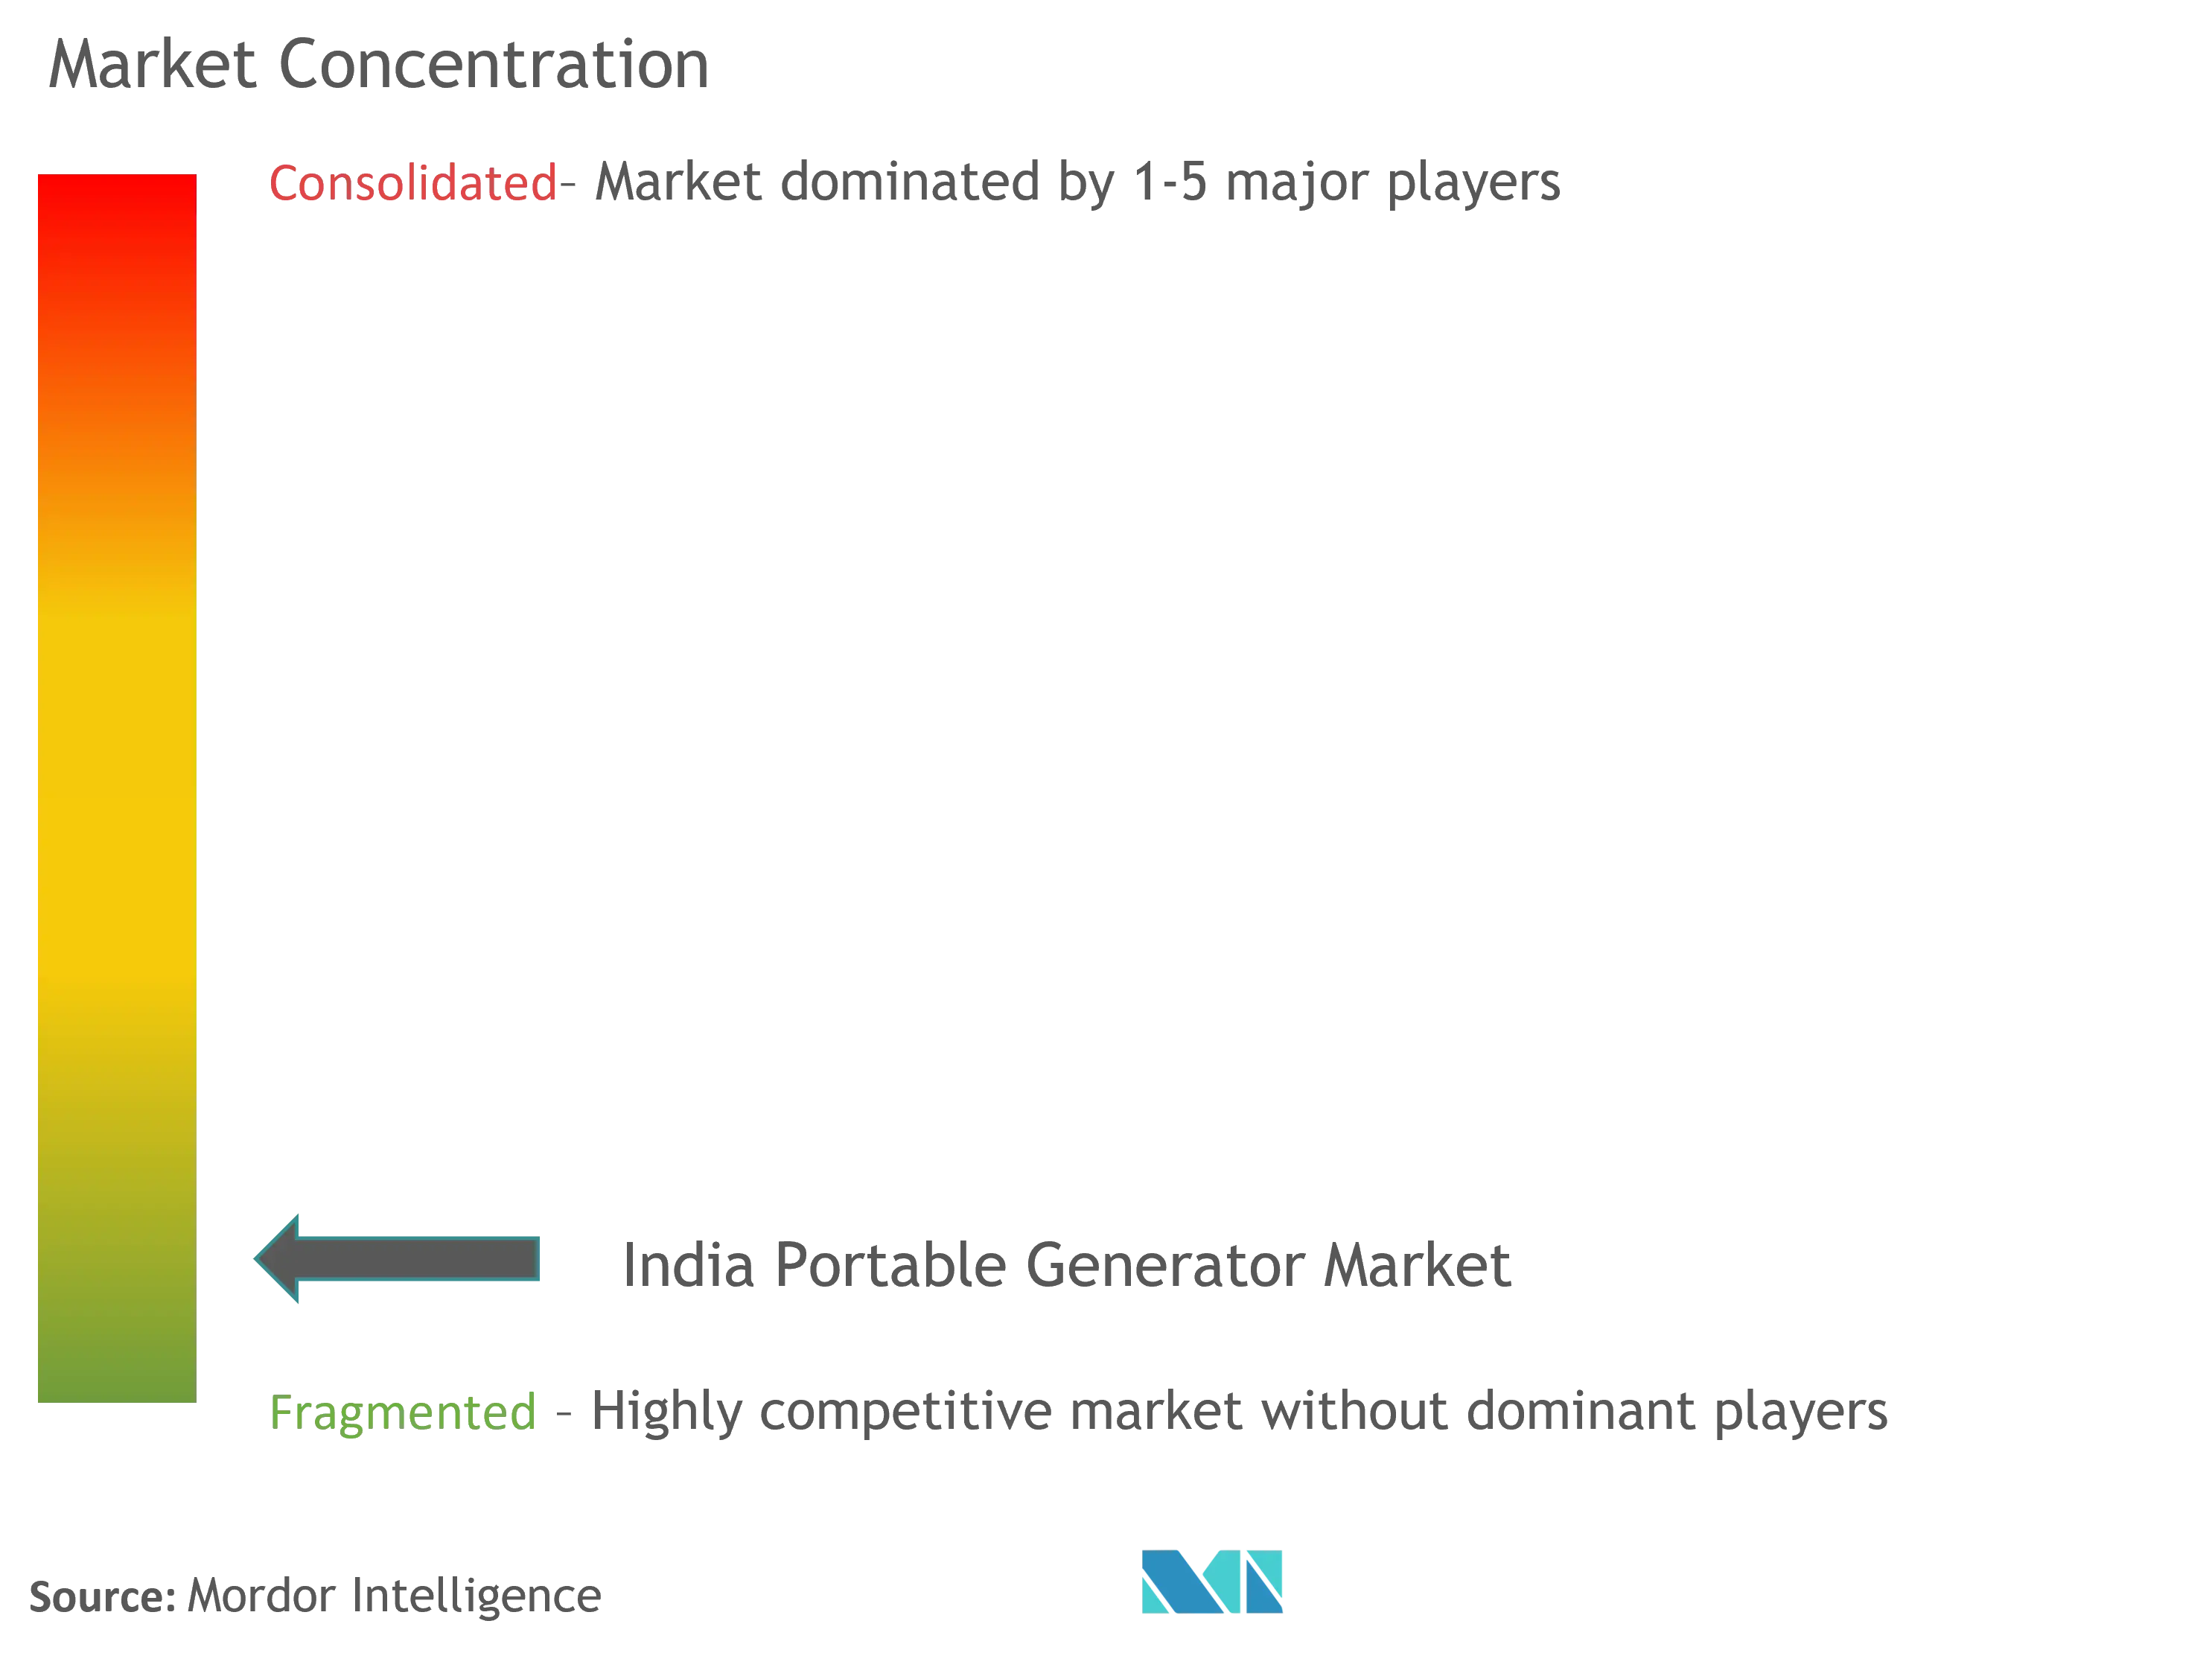 Market Concentration - India Portable Diesel Generator Market.png